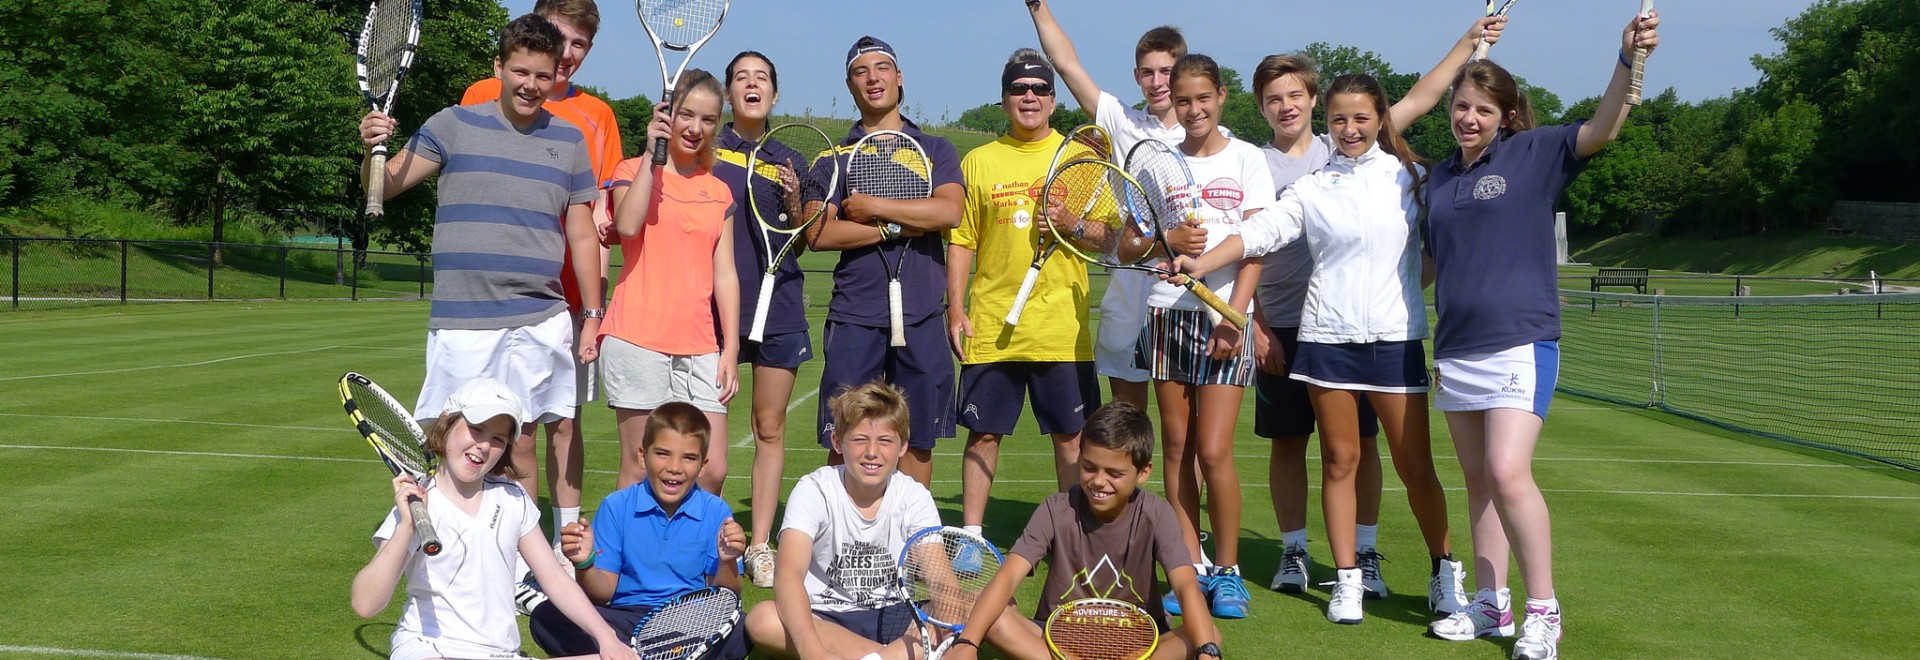 Jonathan Markson Junior Tennis Camp (and Language Classes) - Giggleswick School, Yorkshire